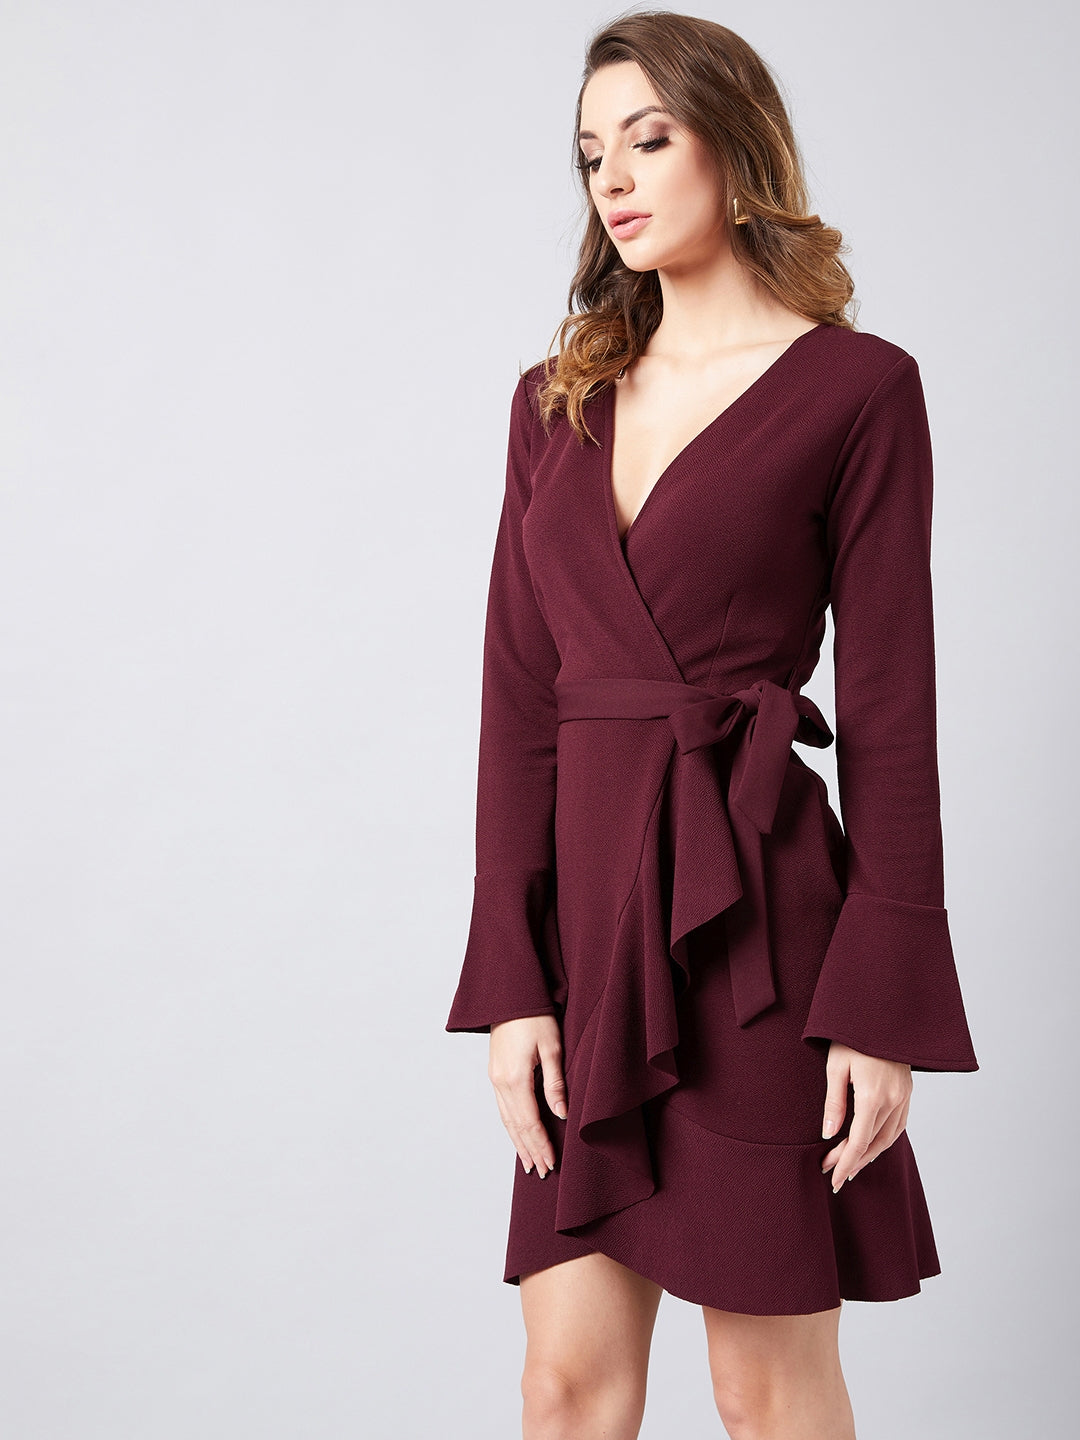 Athena Burgundy V-Neck Wrap Dress - Athena Lifestyle